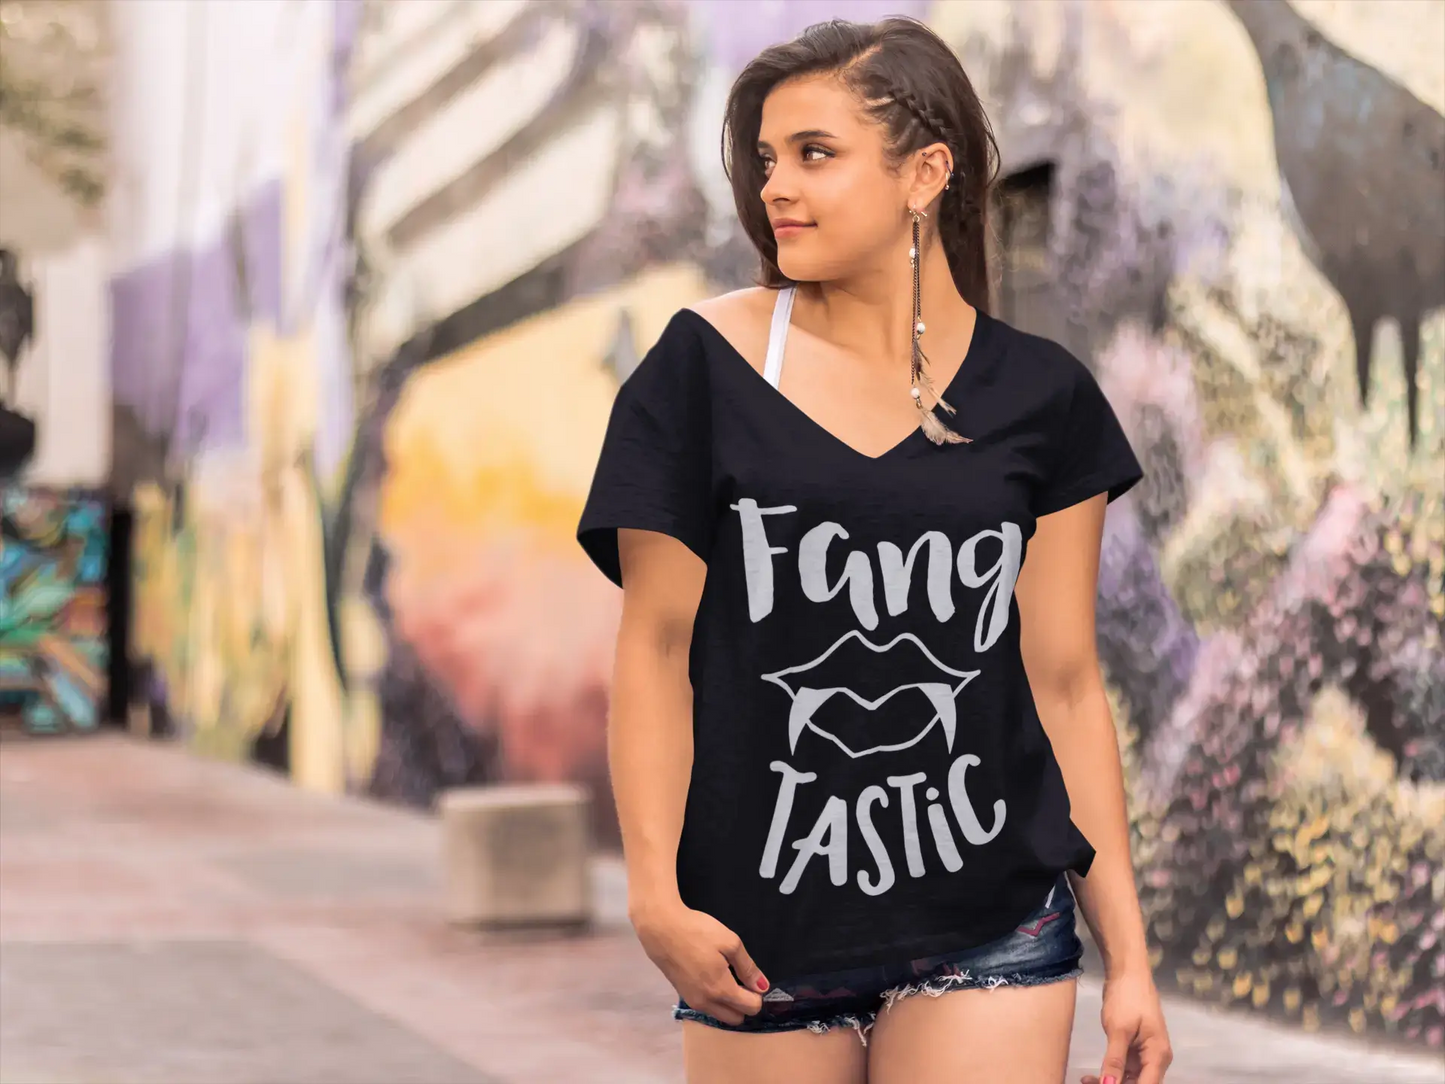 ULTRABASIC Women's T-Shirt Fang Tastic - Fantastic Short Sleeve Tee Shirt Tops